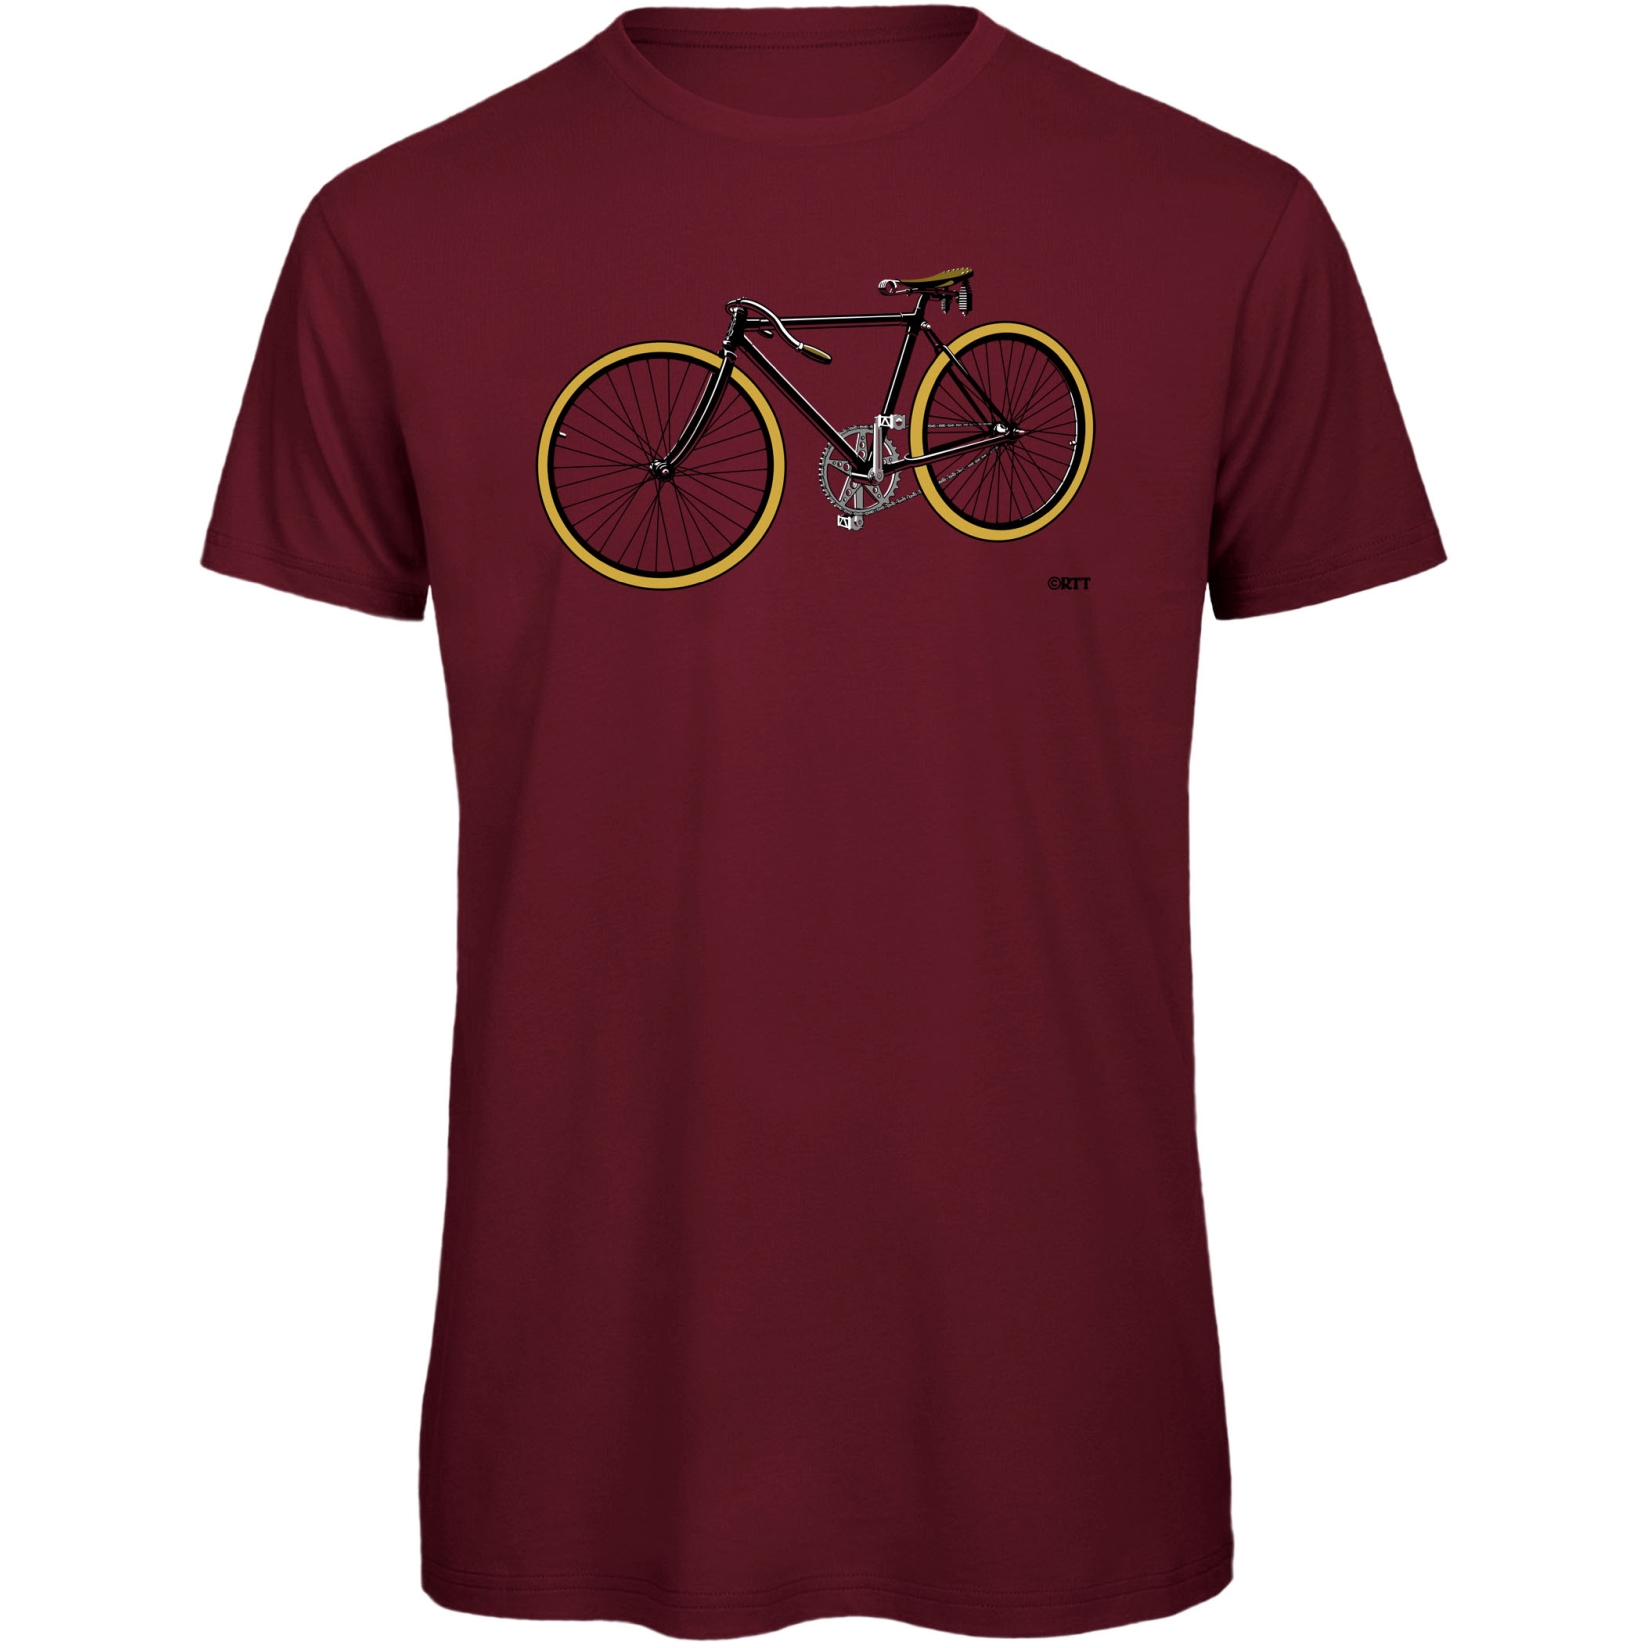 Productfoto van RTTshirts Fiets T-Shirt - Retro Racefiets - bordeaux